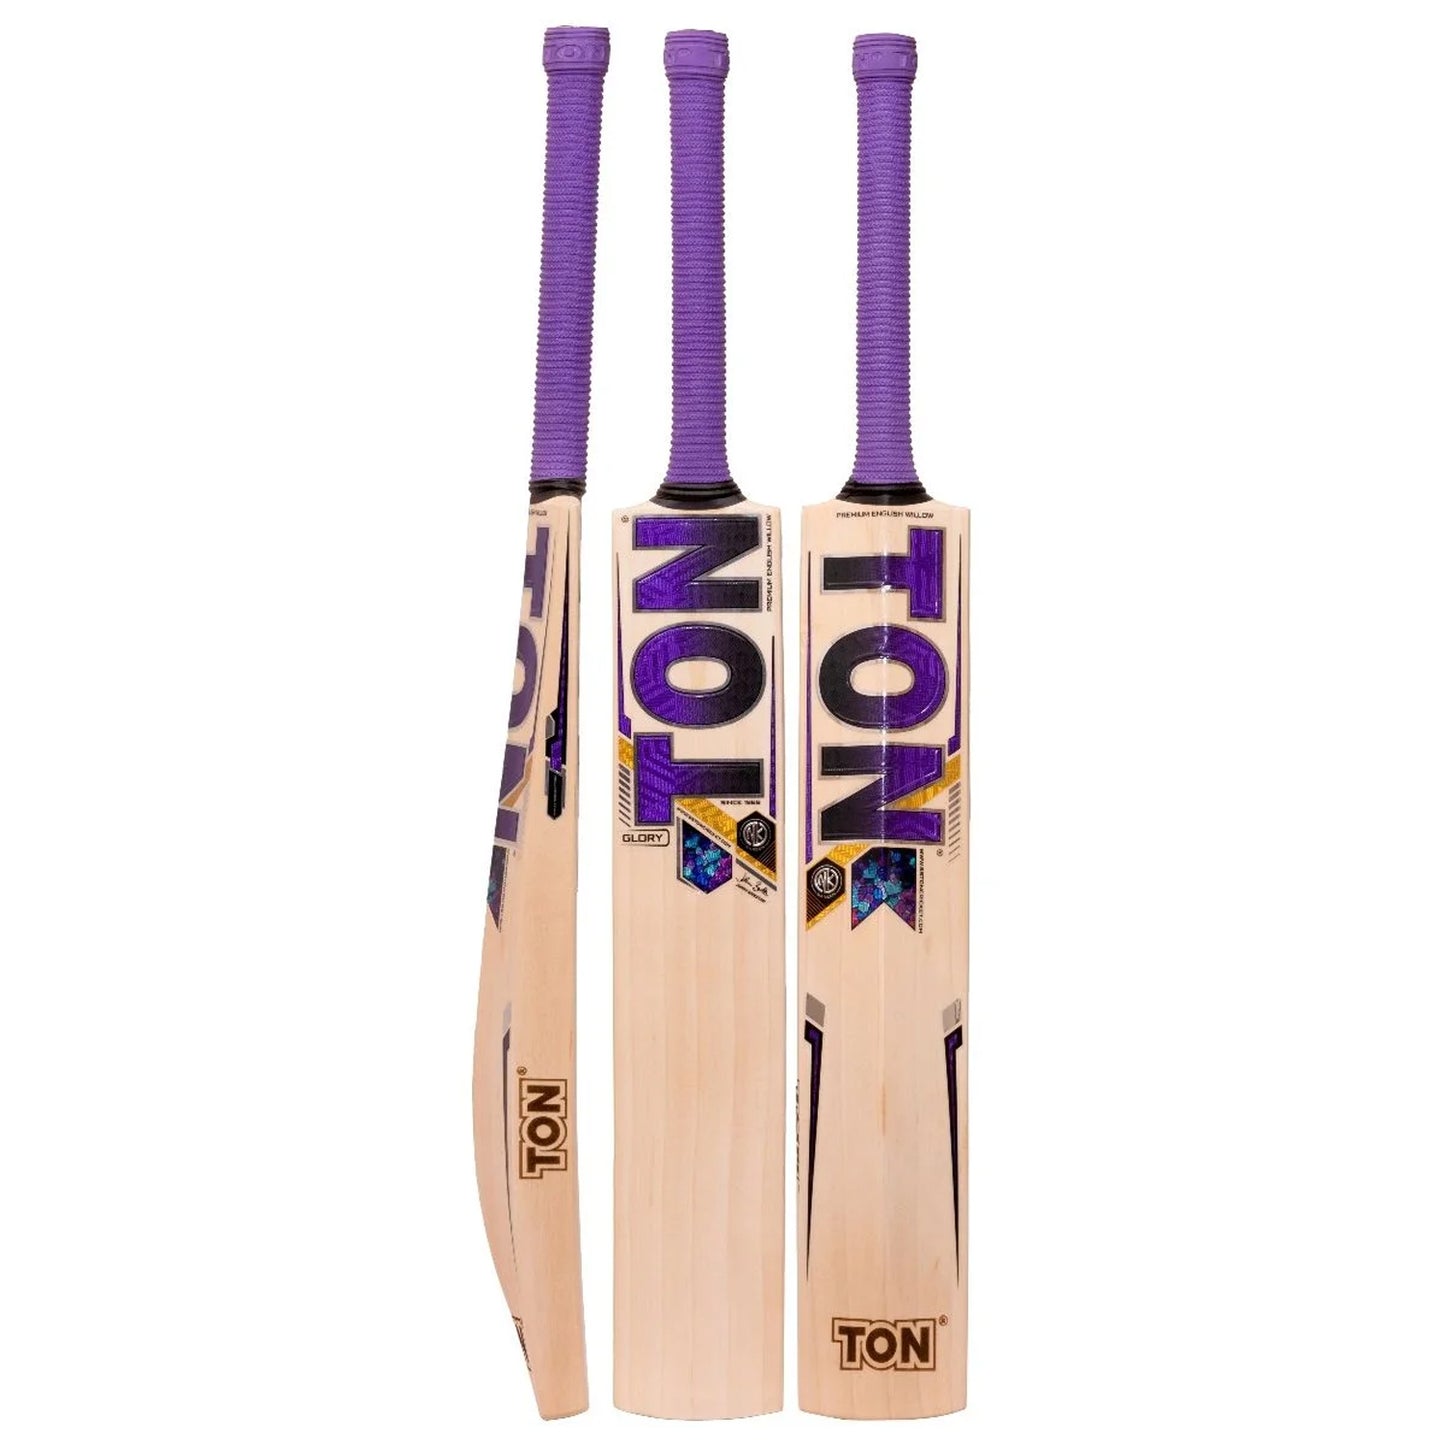 SS Ton Glory English Willow Cricket Bat (Jonny Bairstow) - Best Price online Prokicksports.com